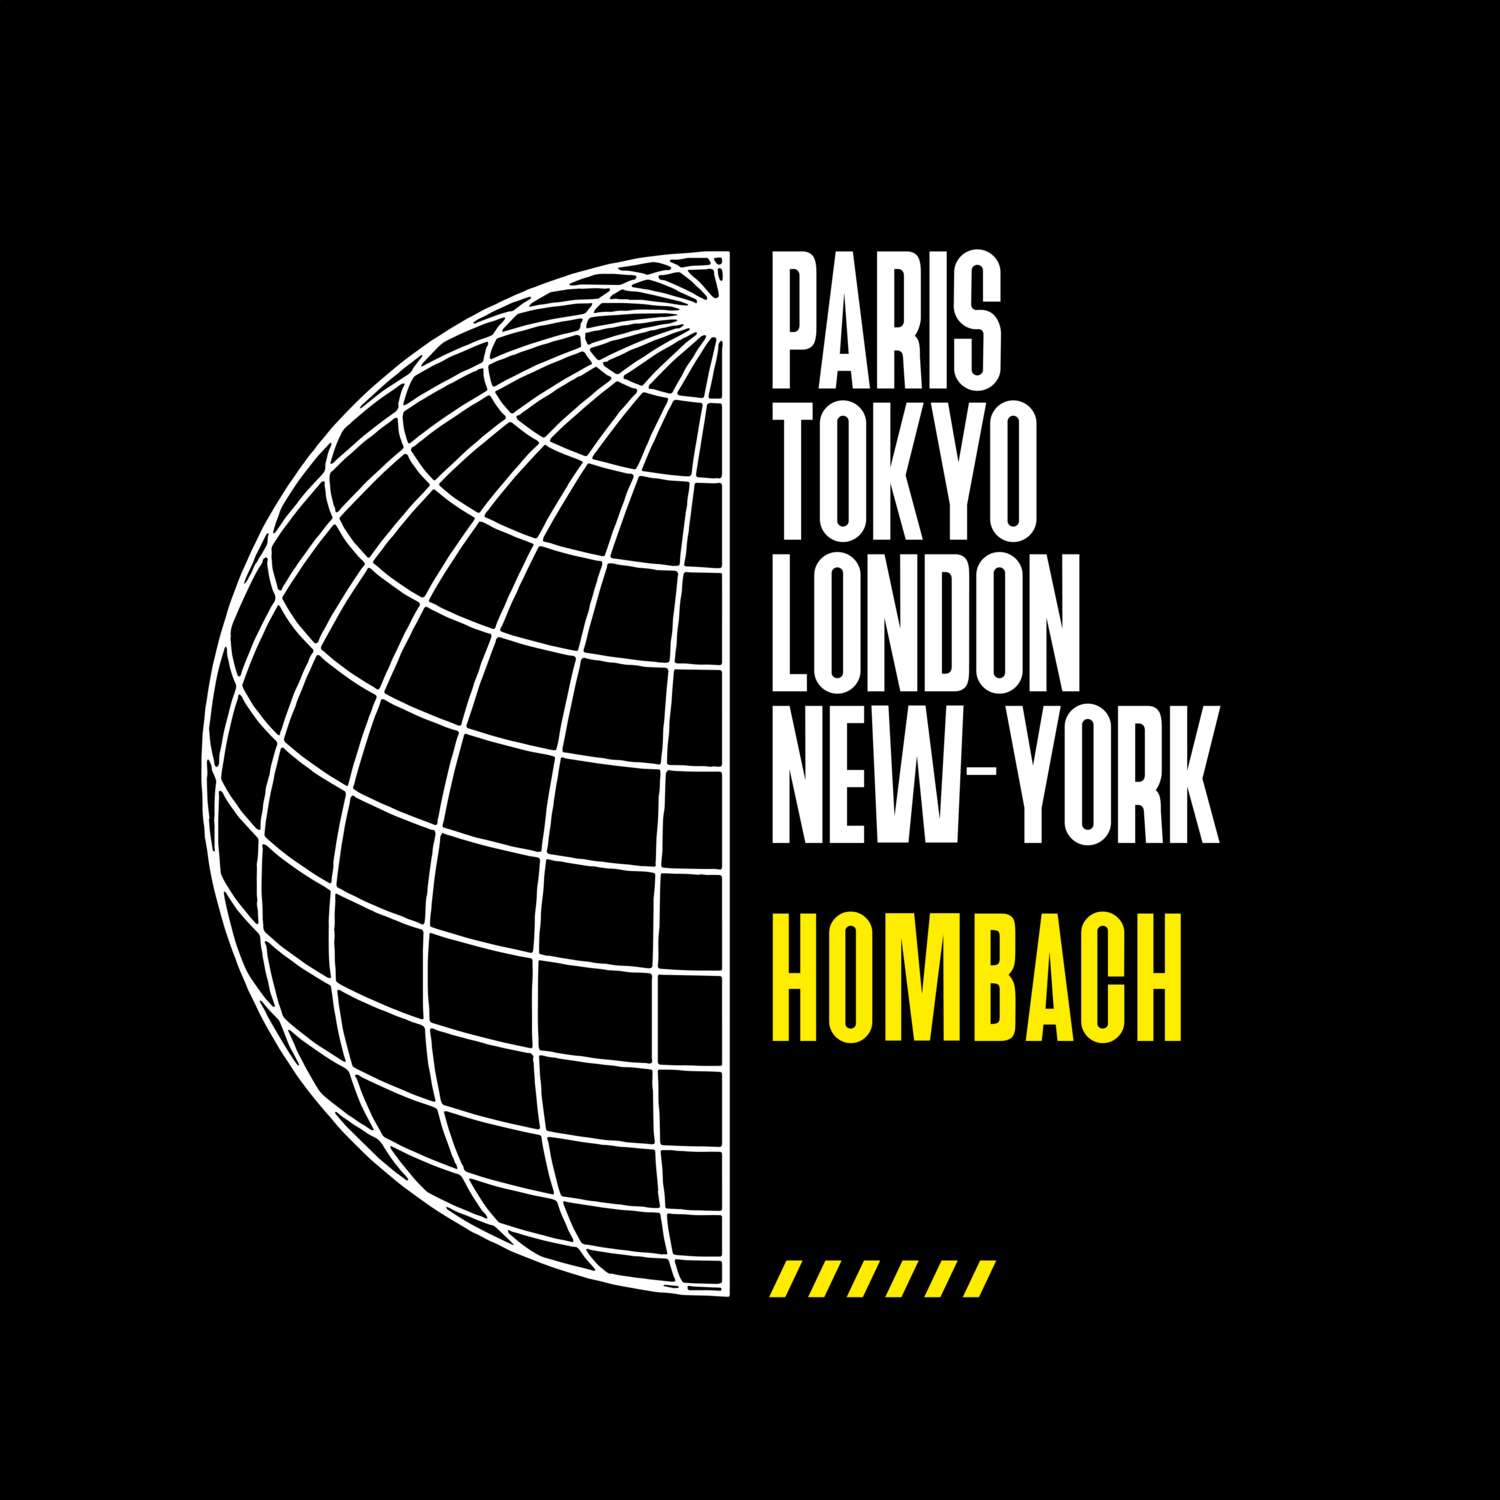 Hombach T-Shirt »Paris Tokyo London«